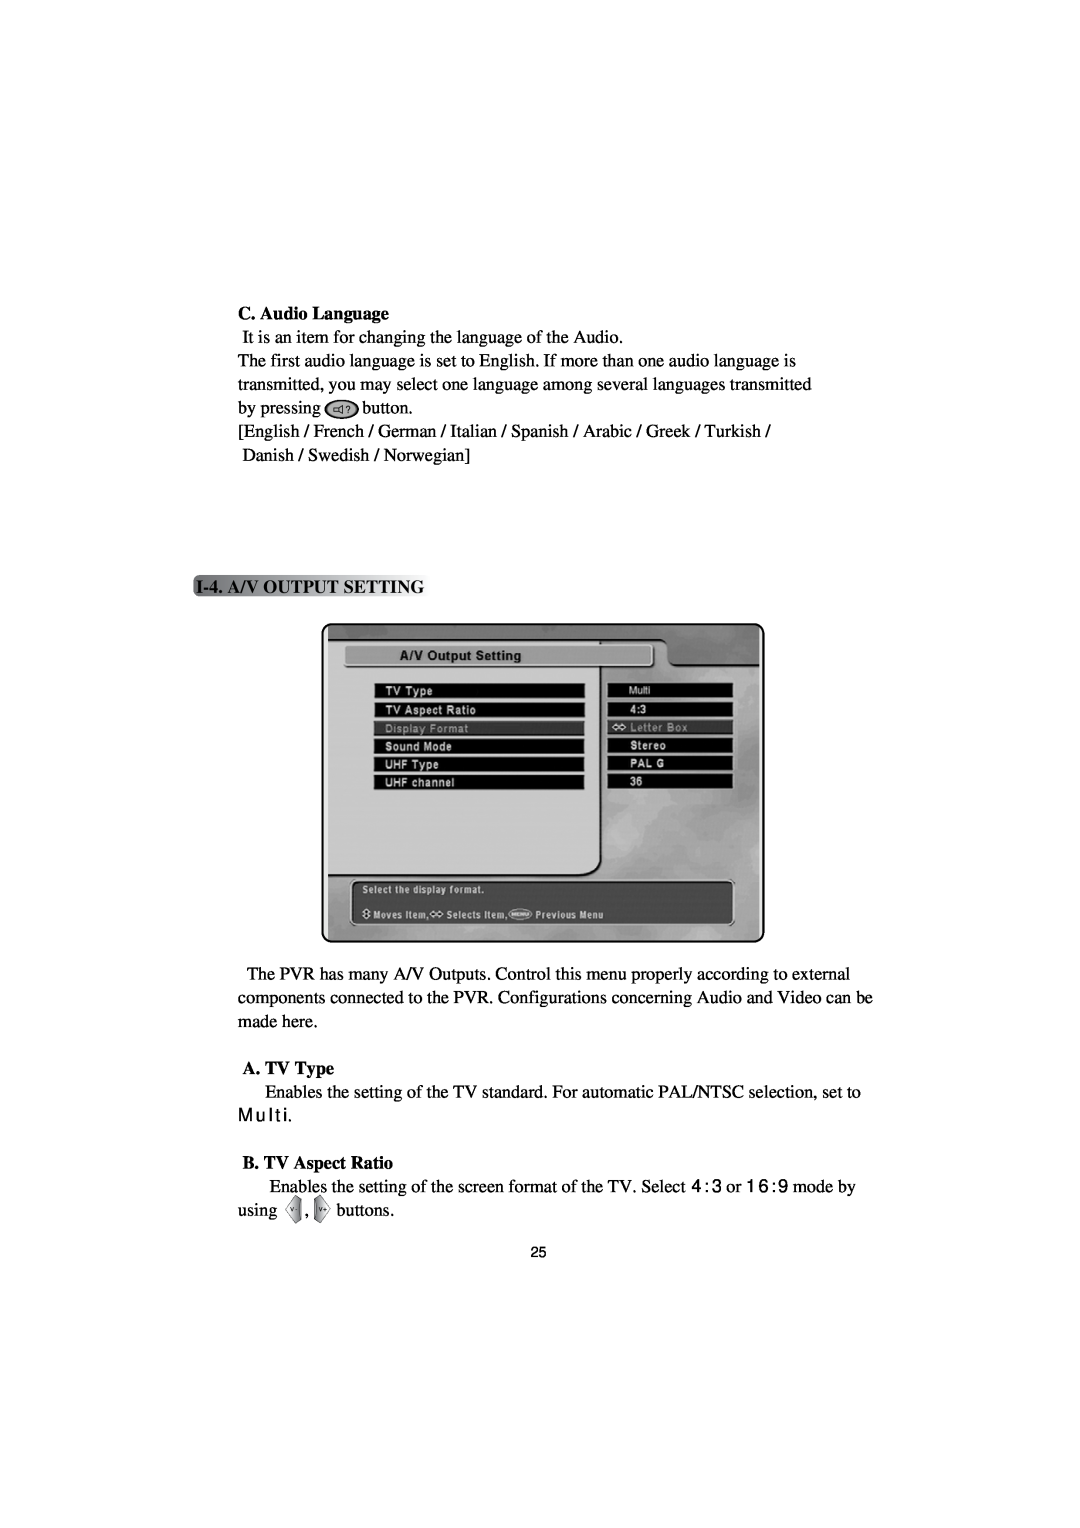 Topfield TF4000PVR CoCI manual C. Audio Language, I-4. A/V OUTPUT SETTING, A. TV Type, M u l t, B. TV Aspect Ratio 